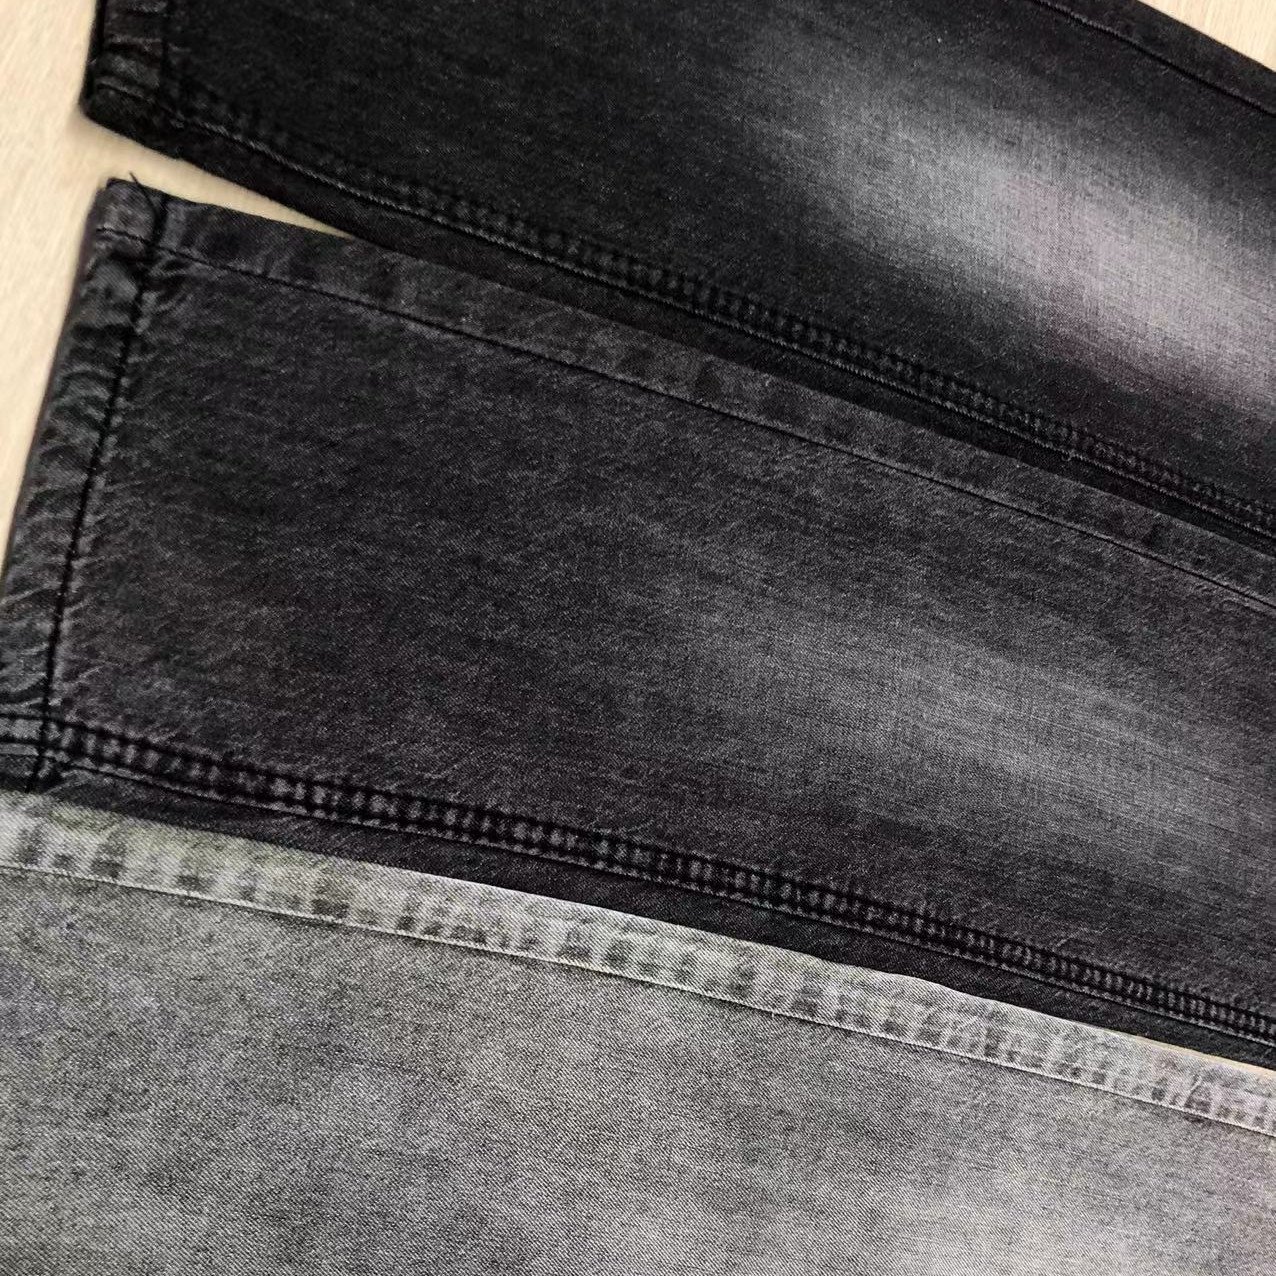 Victorious Men's Slim Fit Unwashed Raw Denim Jeans DL980 - Black/Timber -  36/32 - Walmart.com